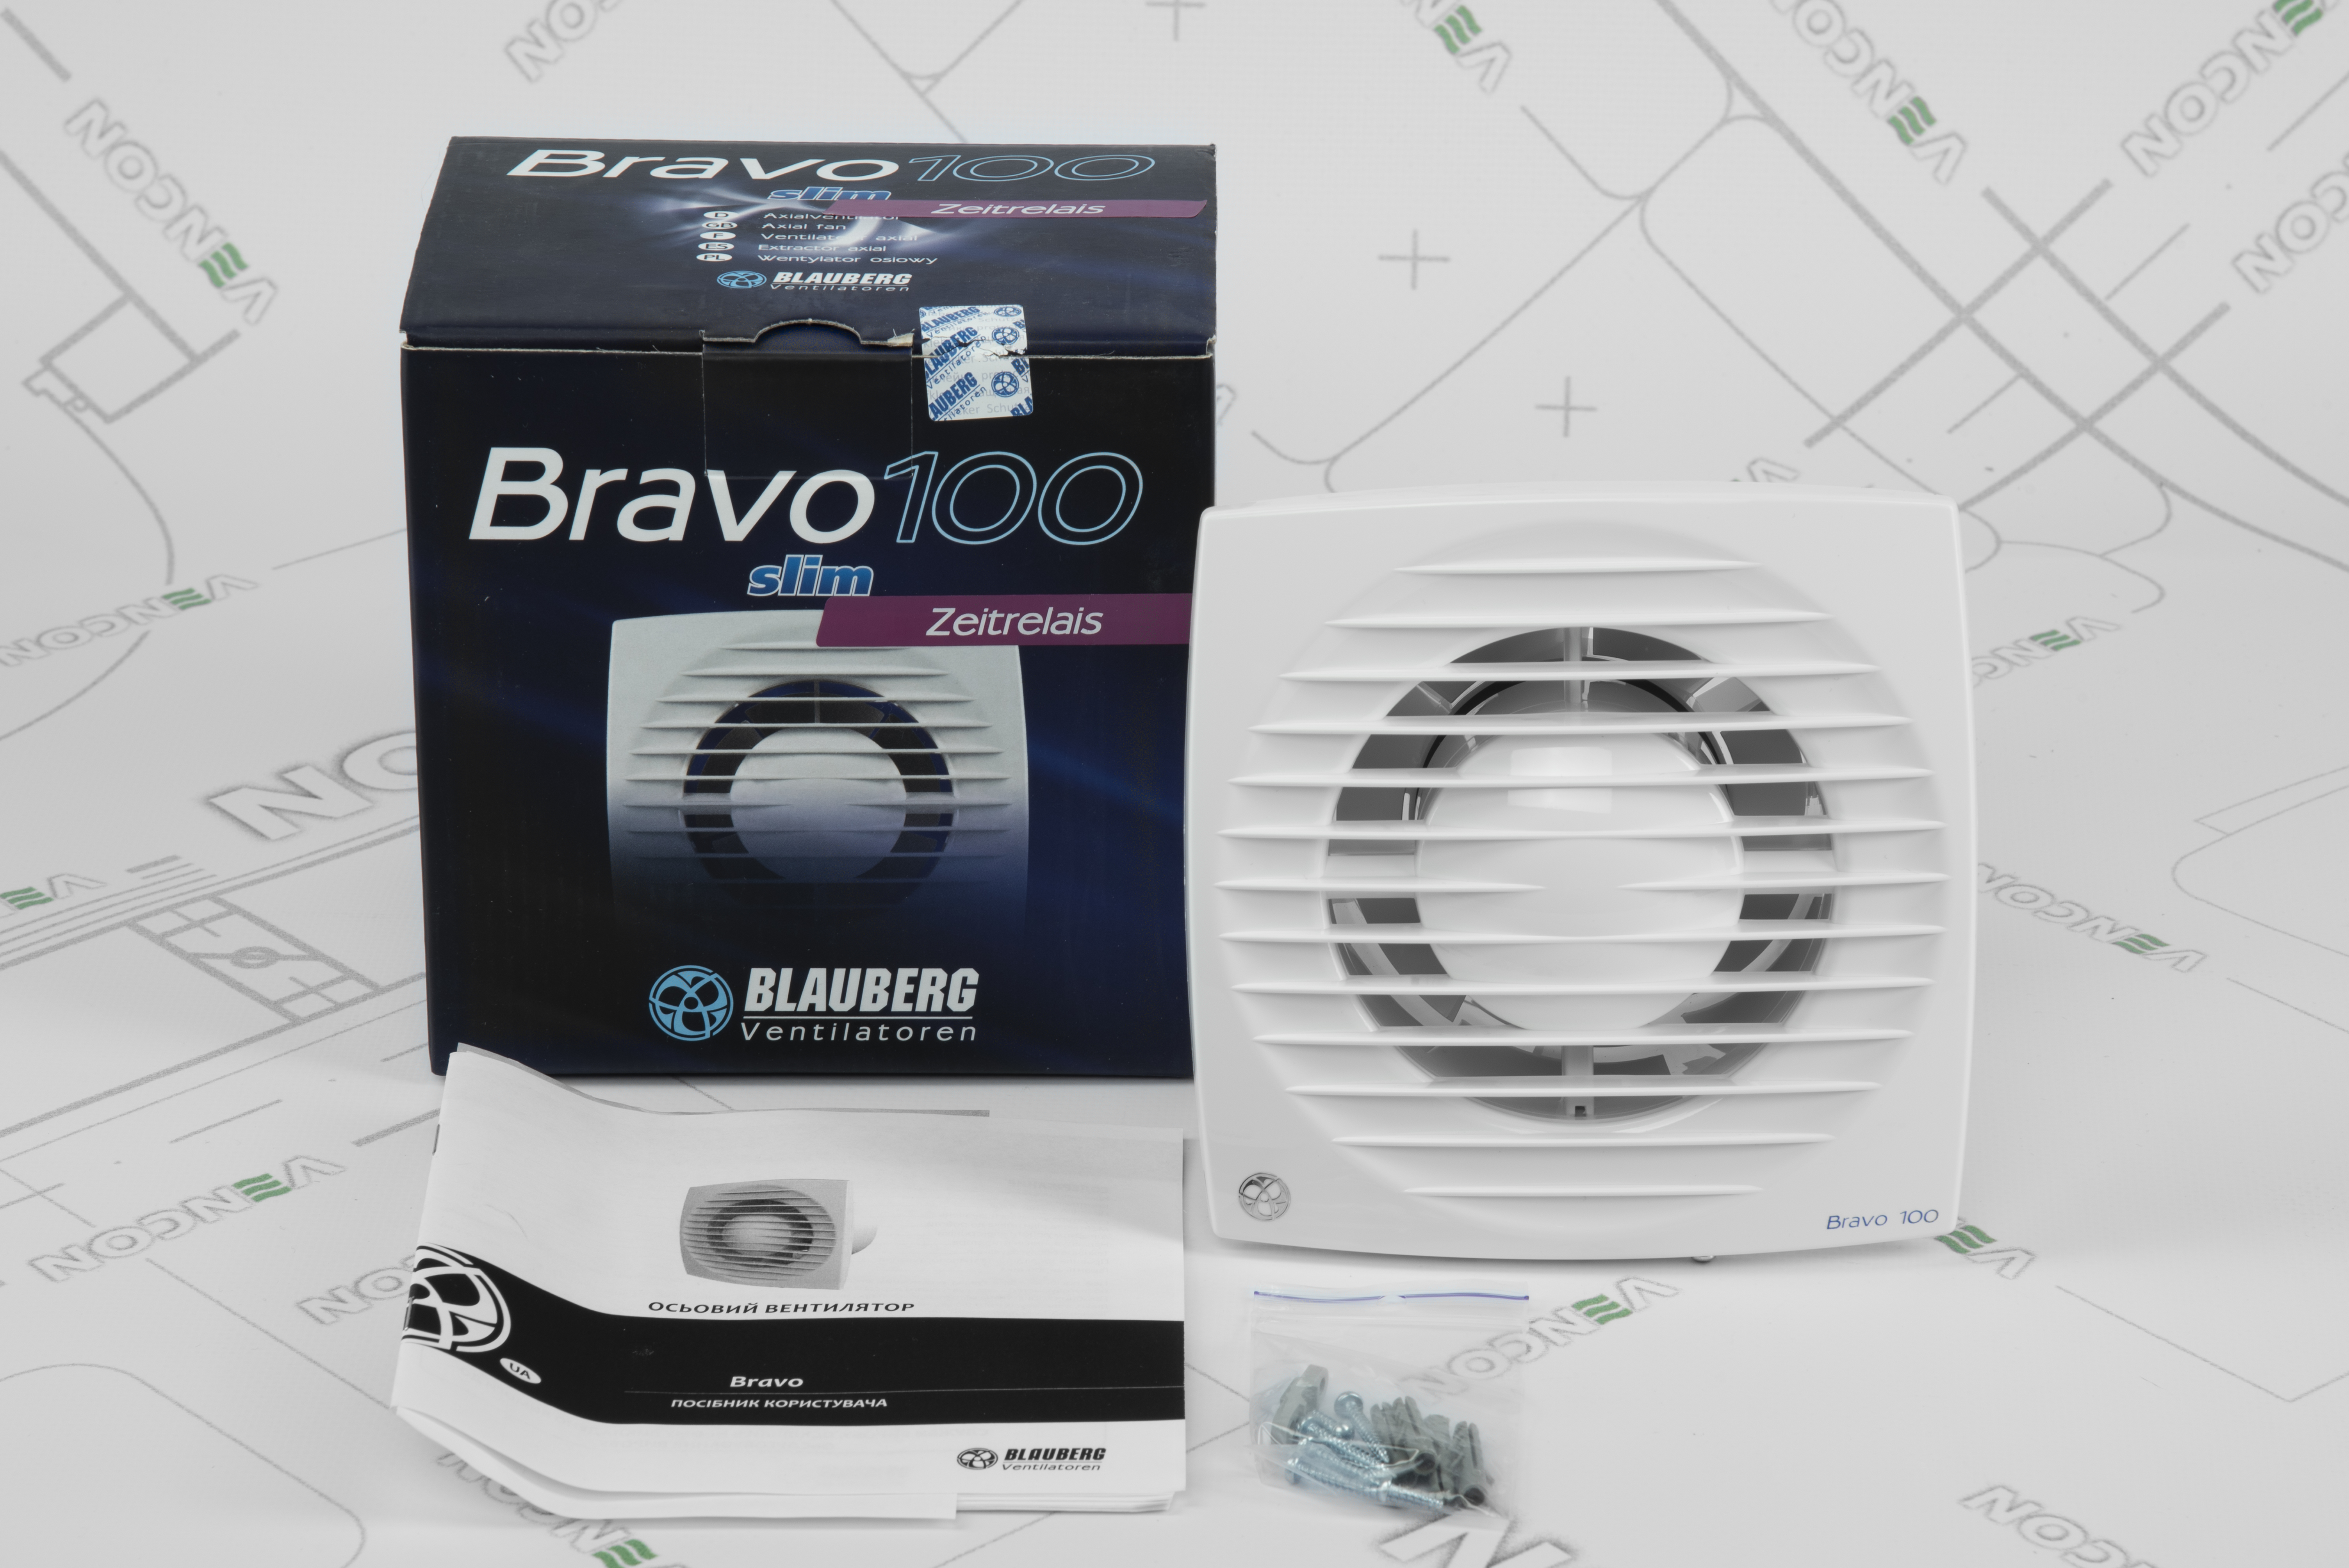 Вытяжной вентилятор Blauberg Bravo 100 T характеристики - фотография 7